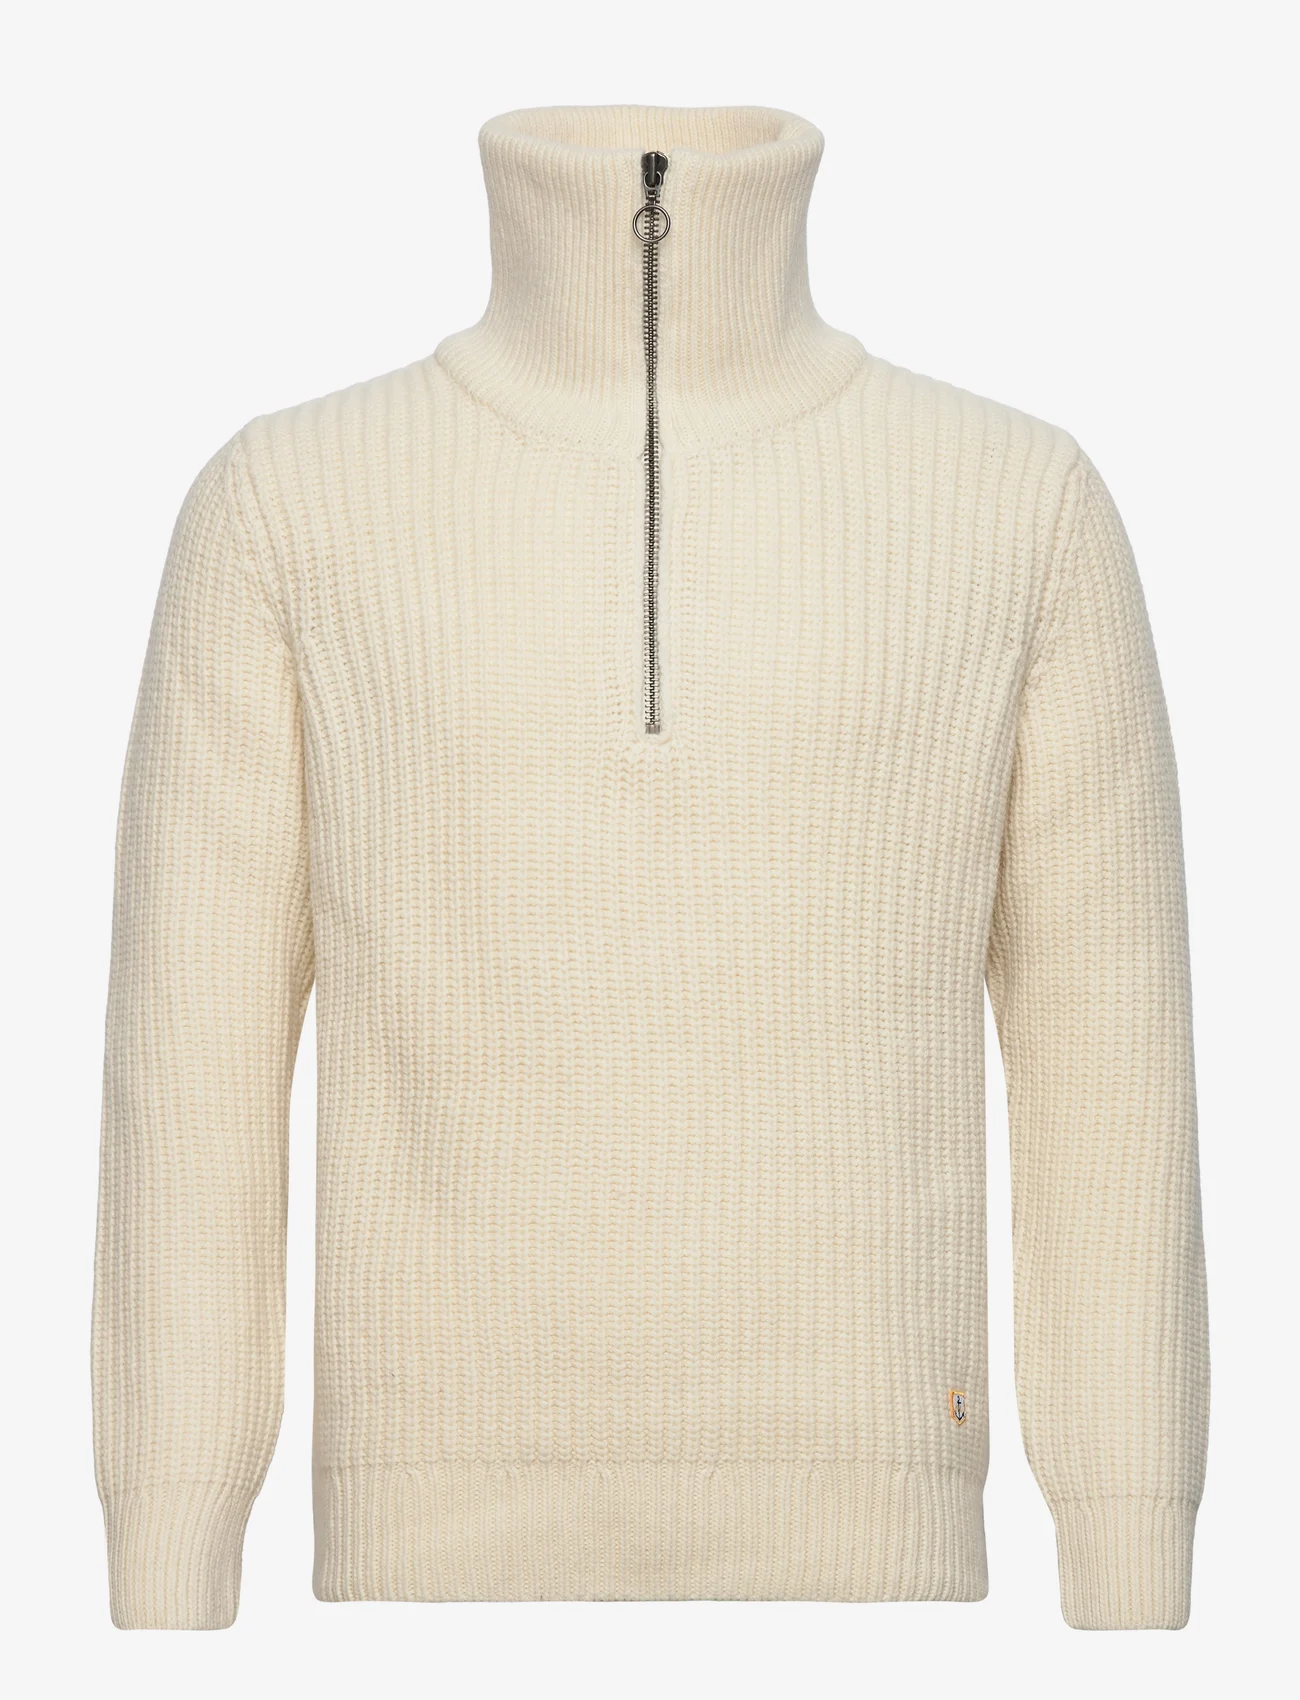 Armor Lux - Zip-up Sweater Héritage - basic-strickmode - nature - 0